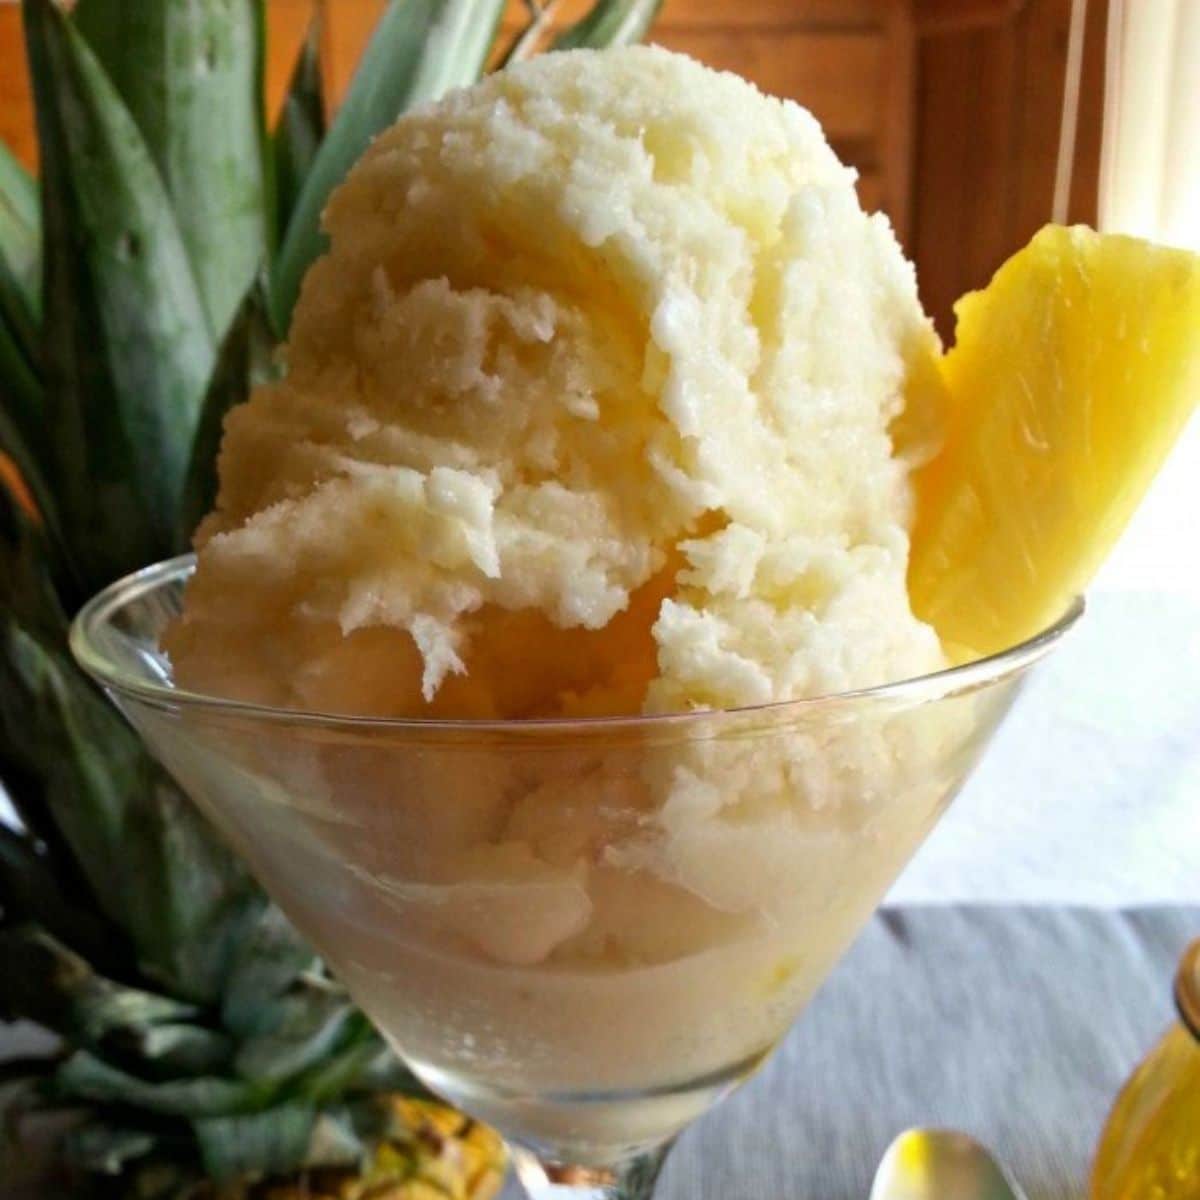 https://www.youbrewmytea.com/wp-content/uploads/2015/08/12.-No-Churn-Pina-Colada-Ice-Cream-1-700x924-1.jpg